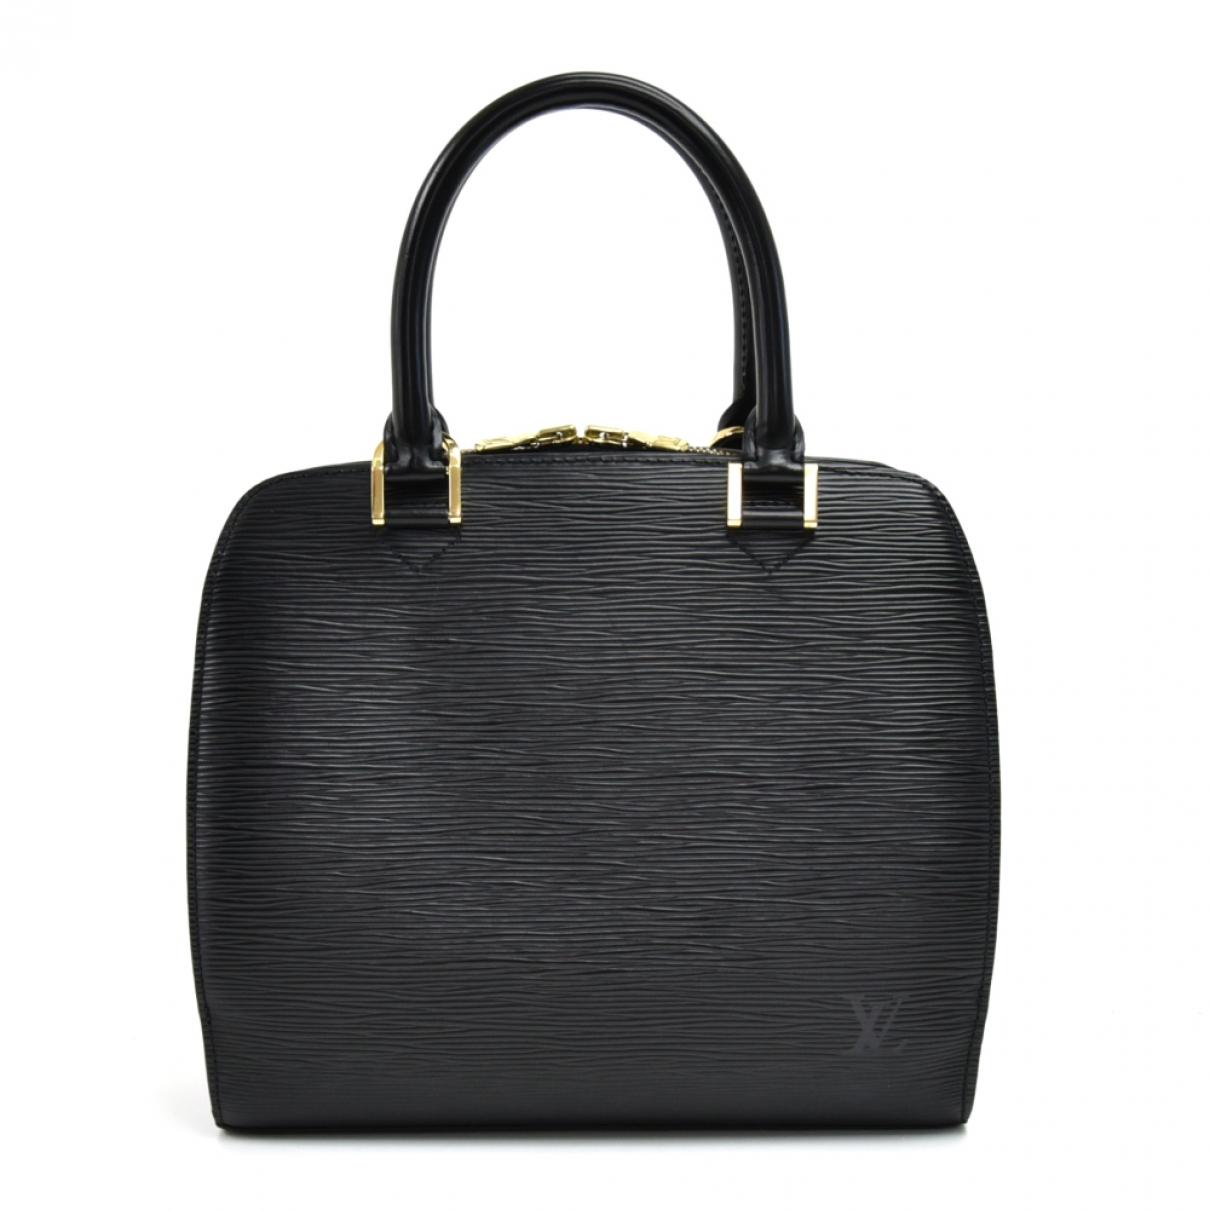 Lyst - Louis Vuitton Pont Neuf Leather Handbag in Black